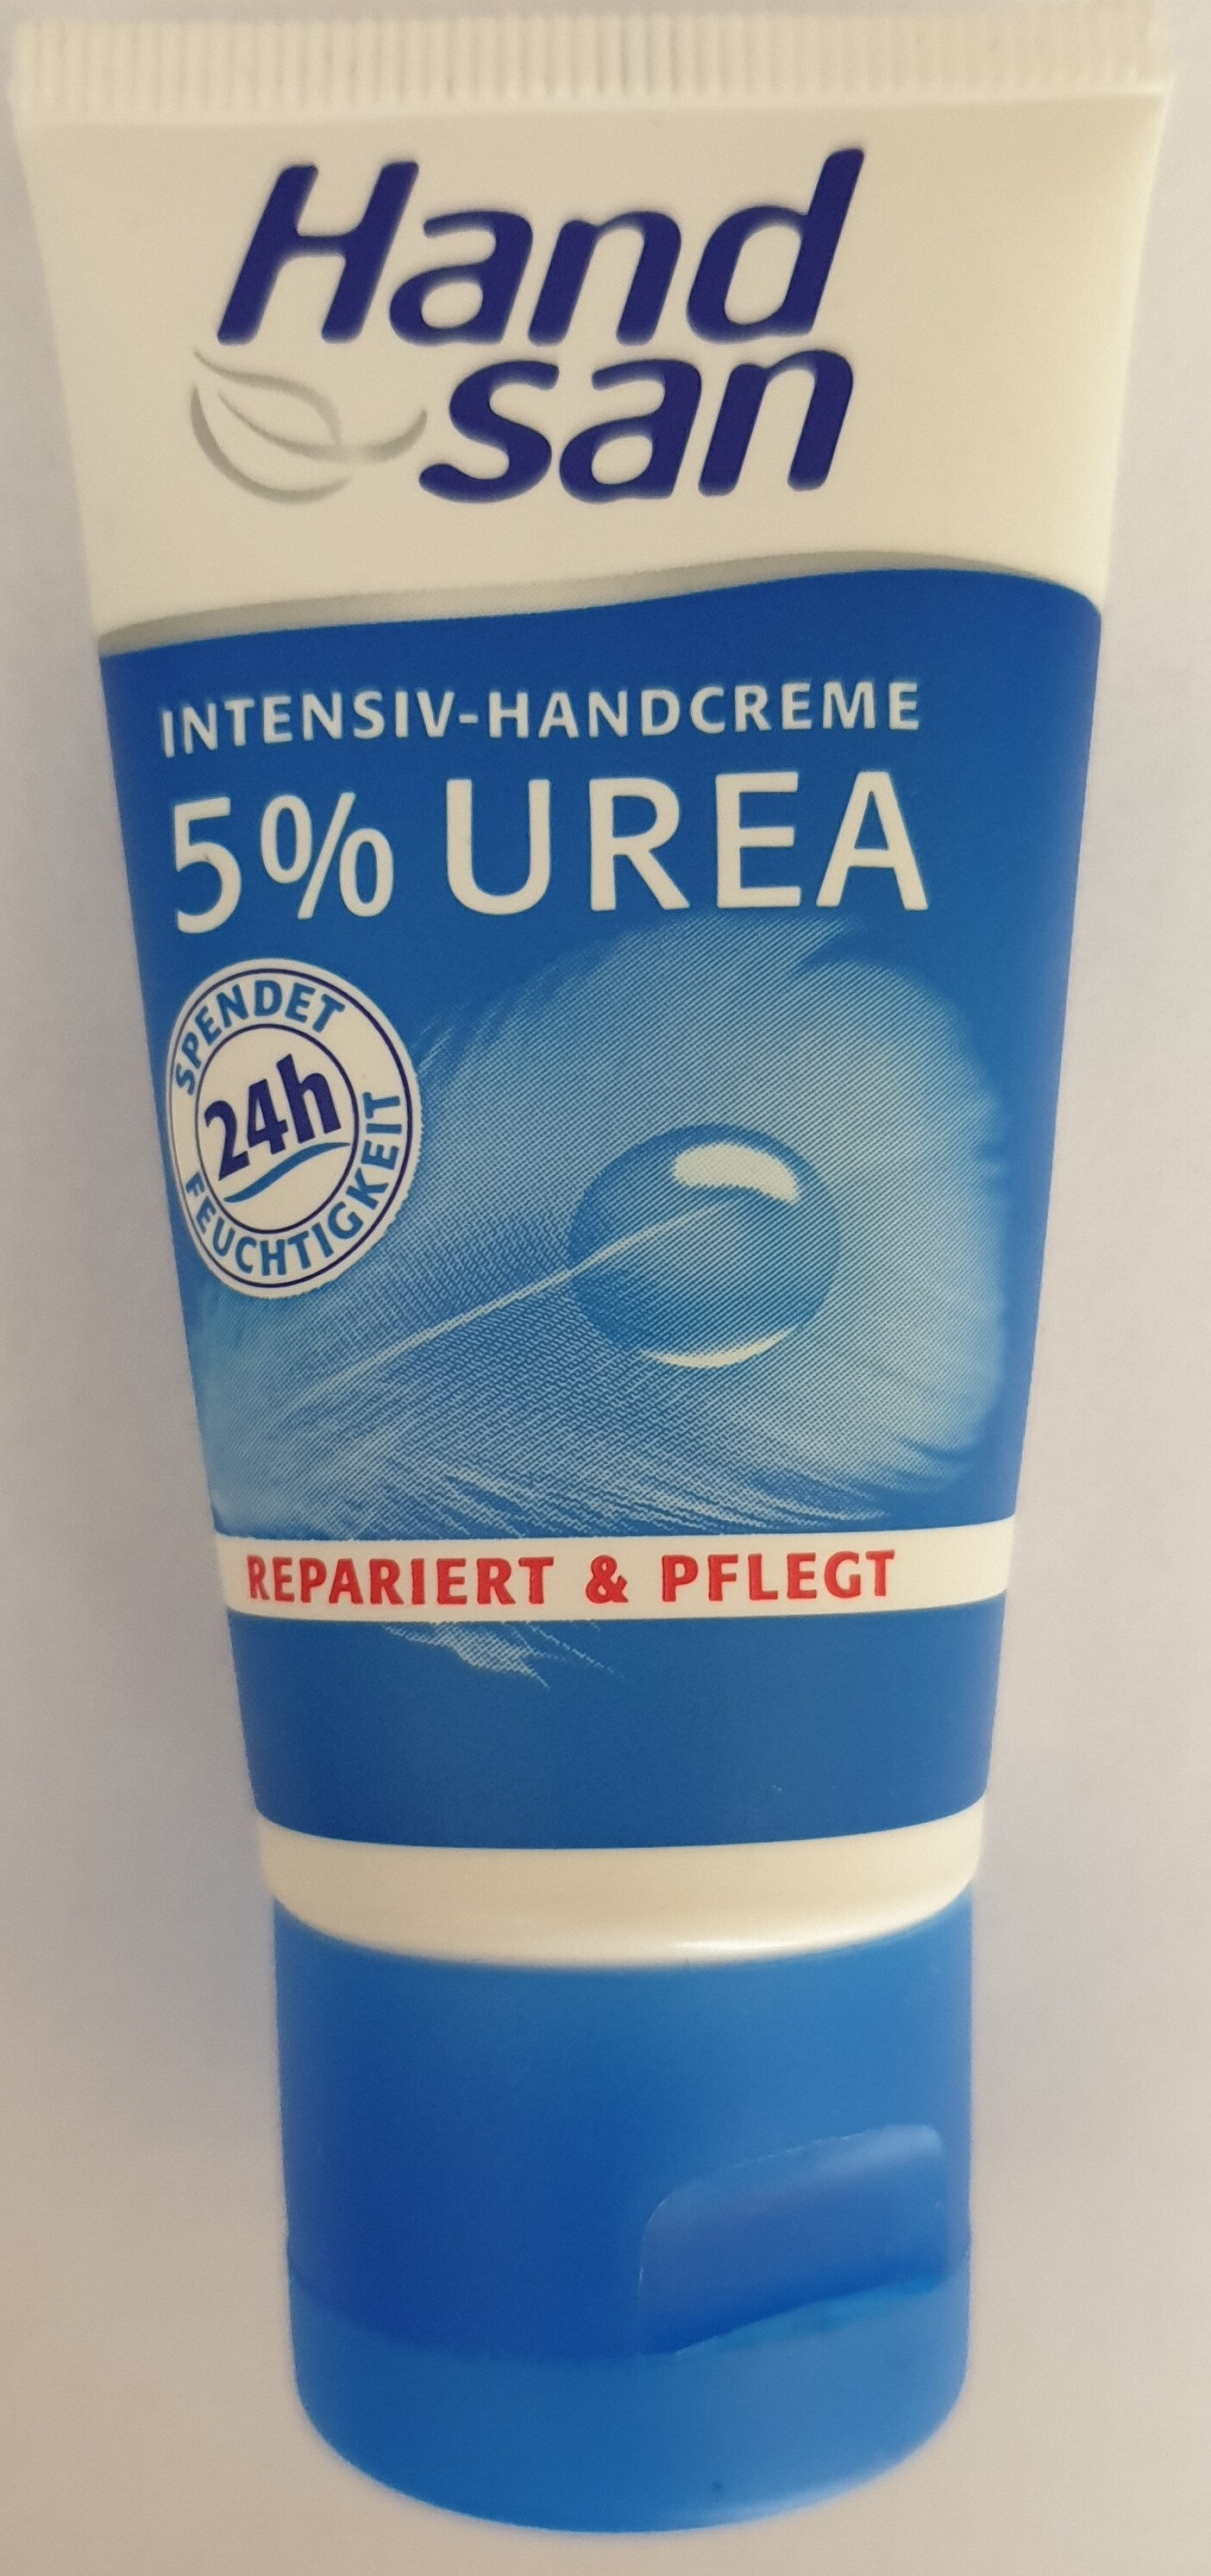 Intensiv-Handcreme 5% Urea - Product - de